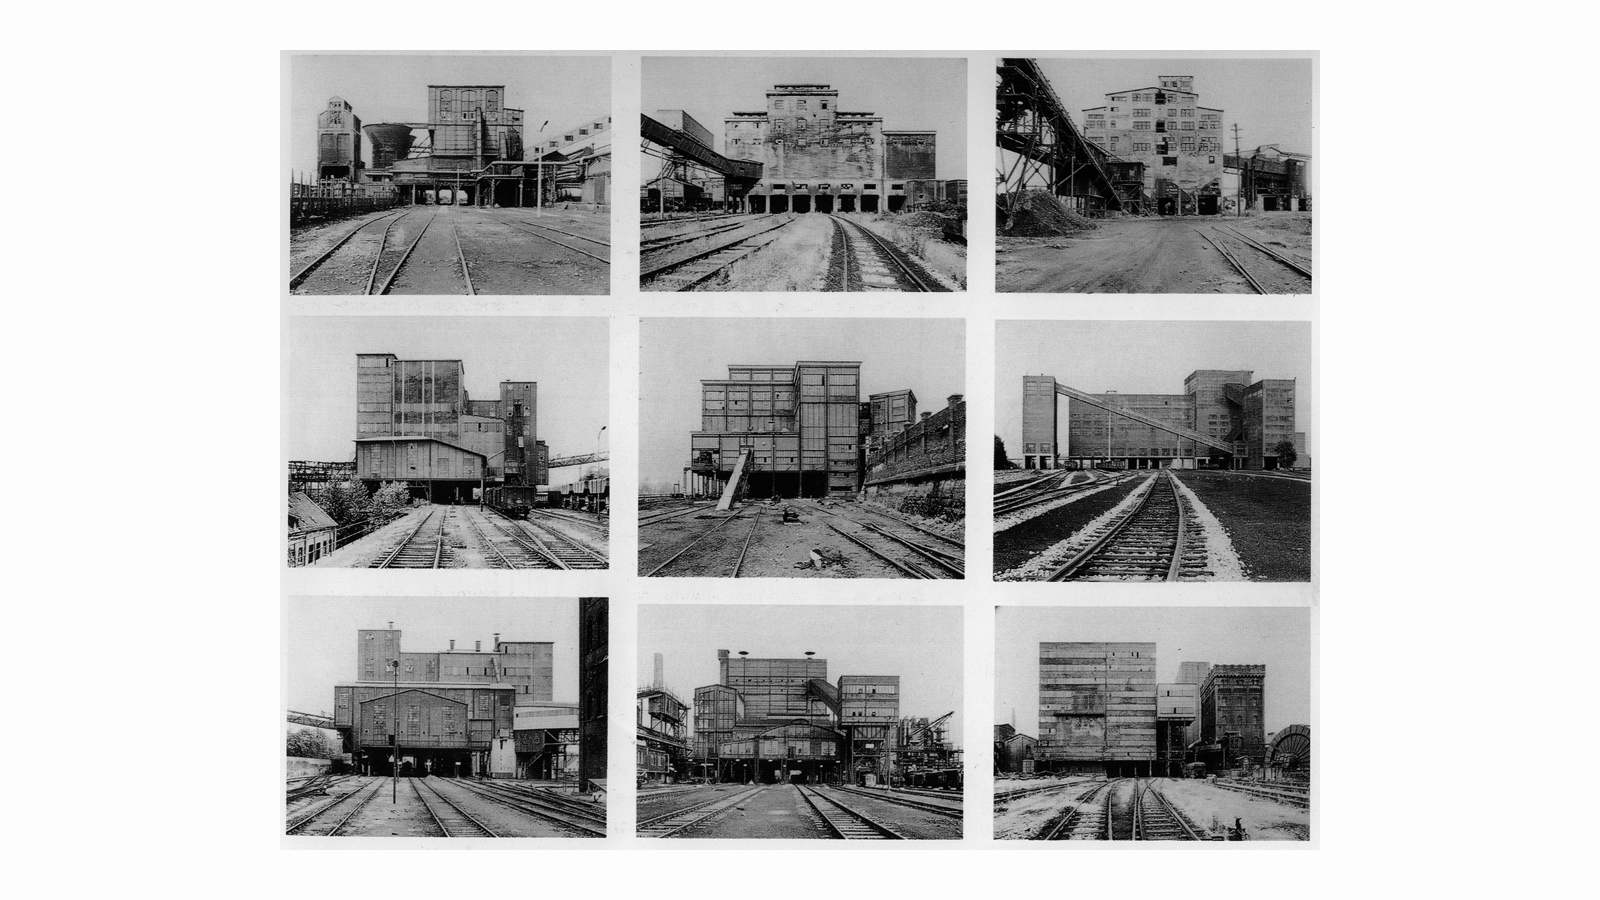 Photographs of train tracks